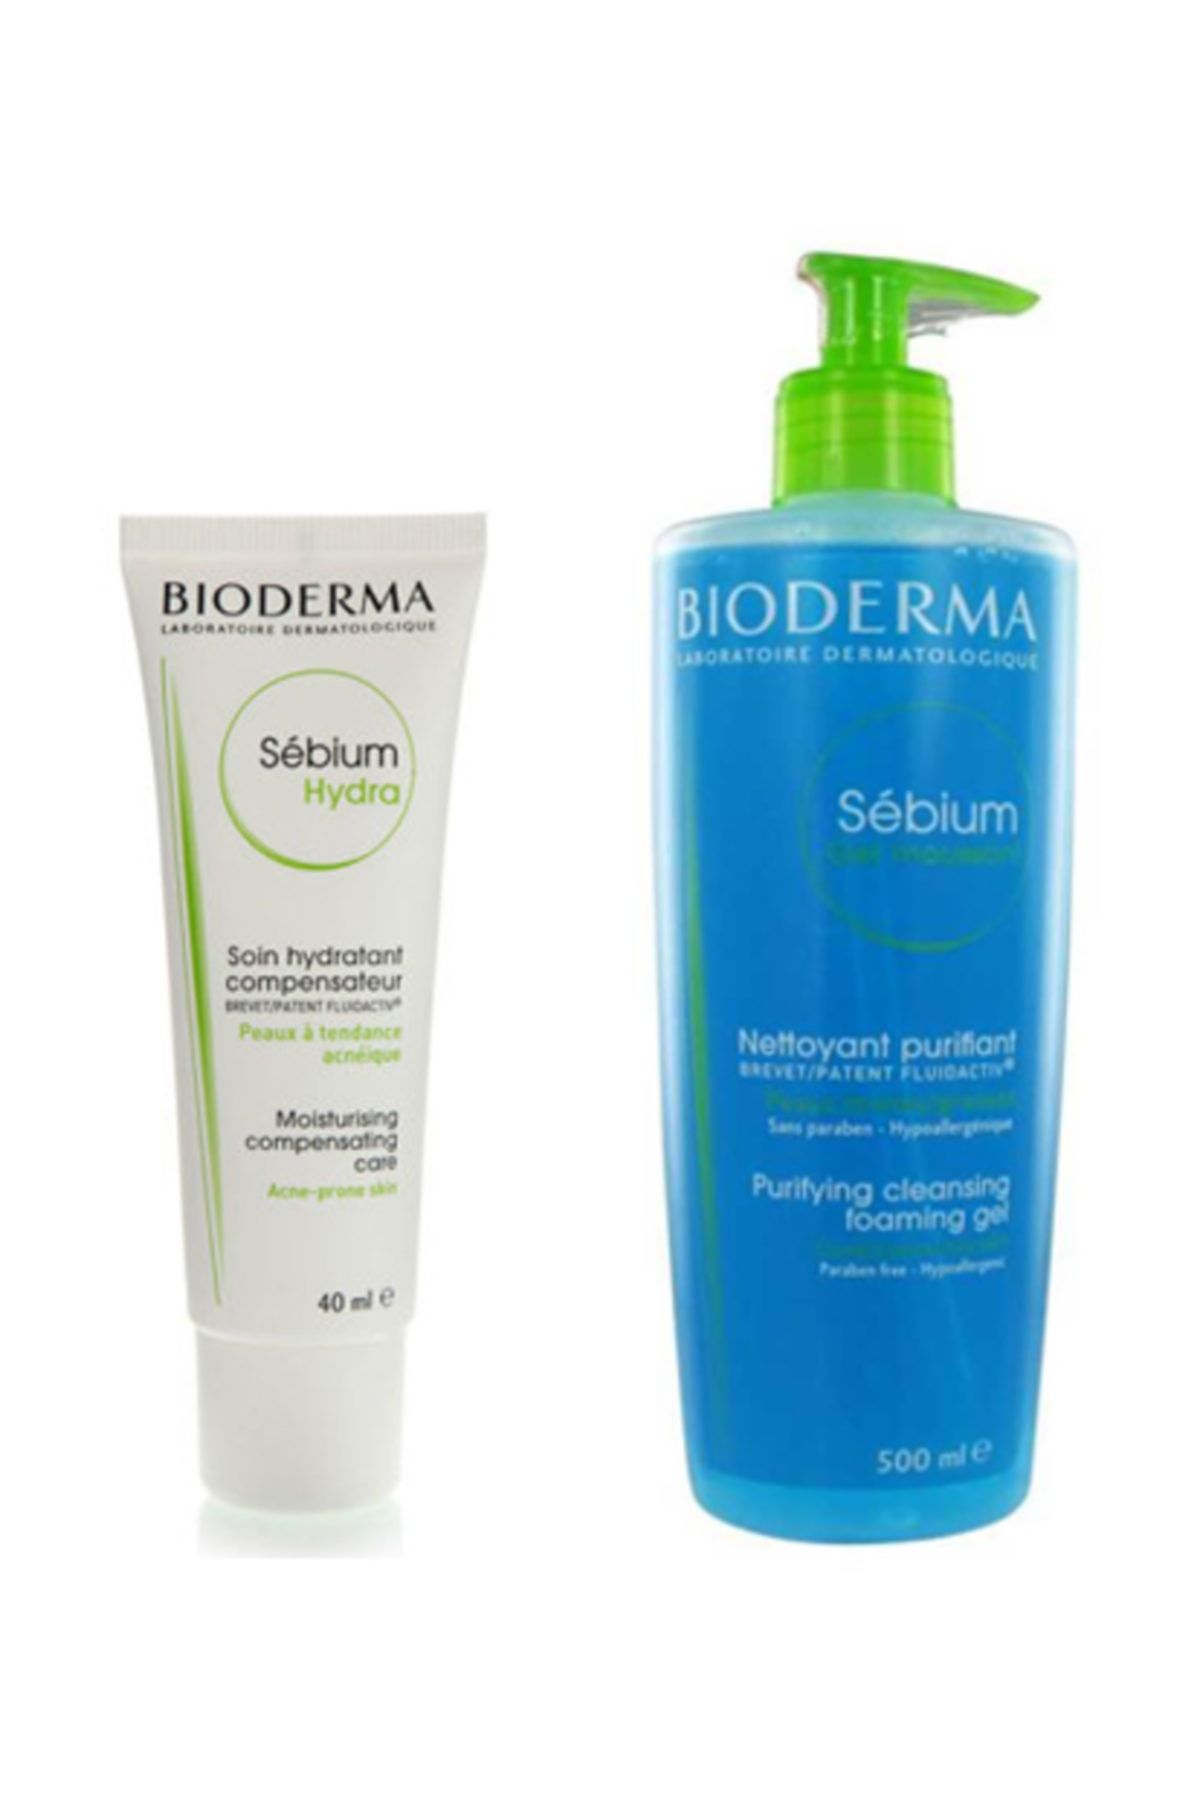 Bioderma Sebium Hydra Cream 40 ml Sebium Yıkama Jel 500 ml Akne Bakım Seti 20191124001